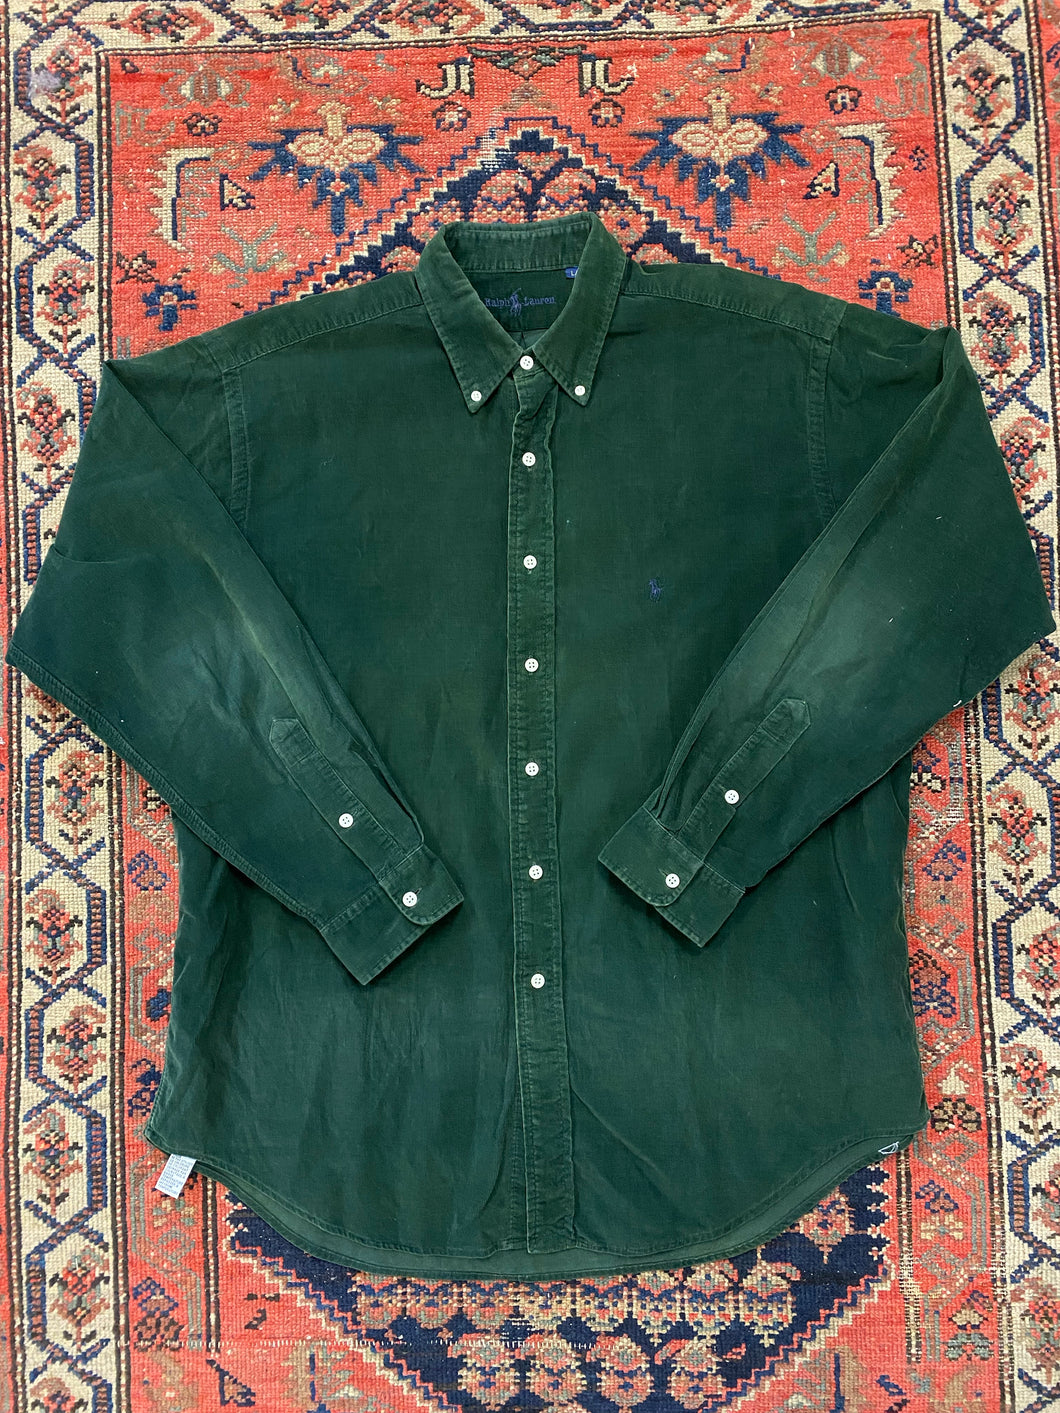 Vintage Corduroy Ralph Lauren Button Up Shirt - XL